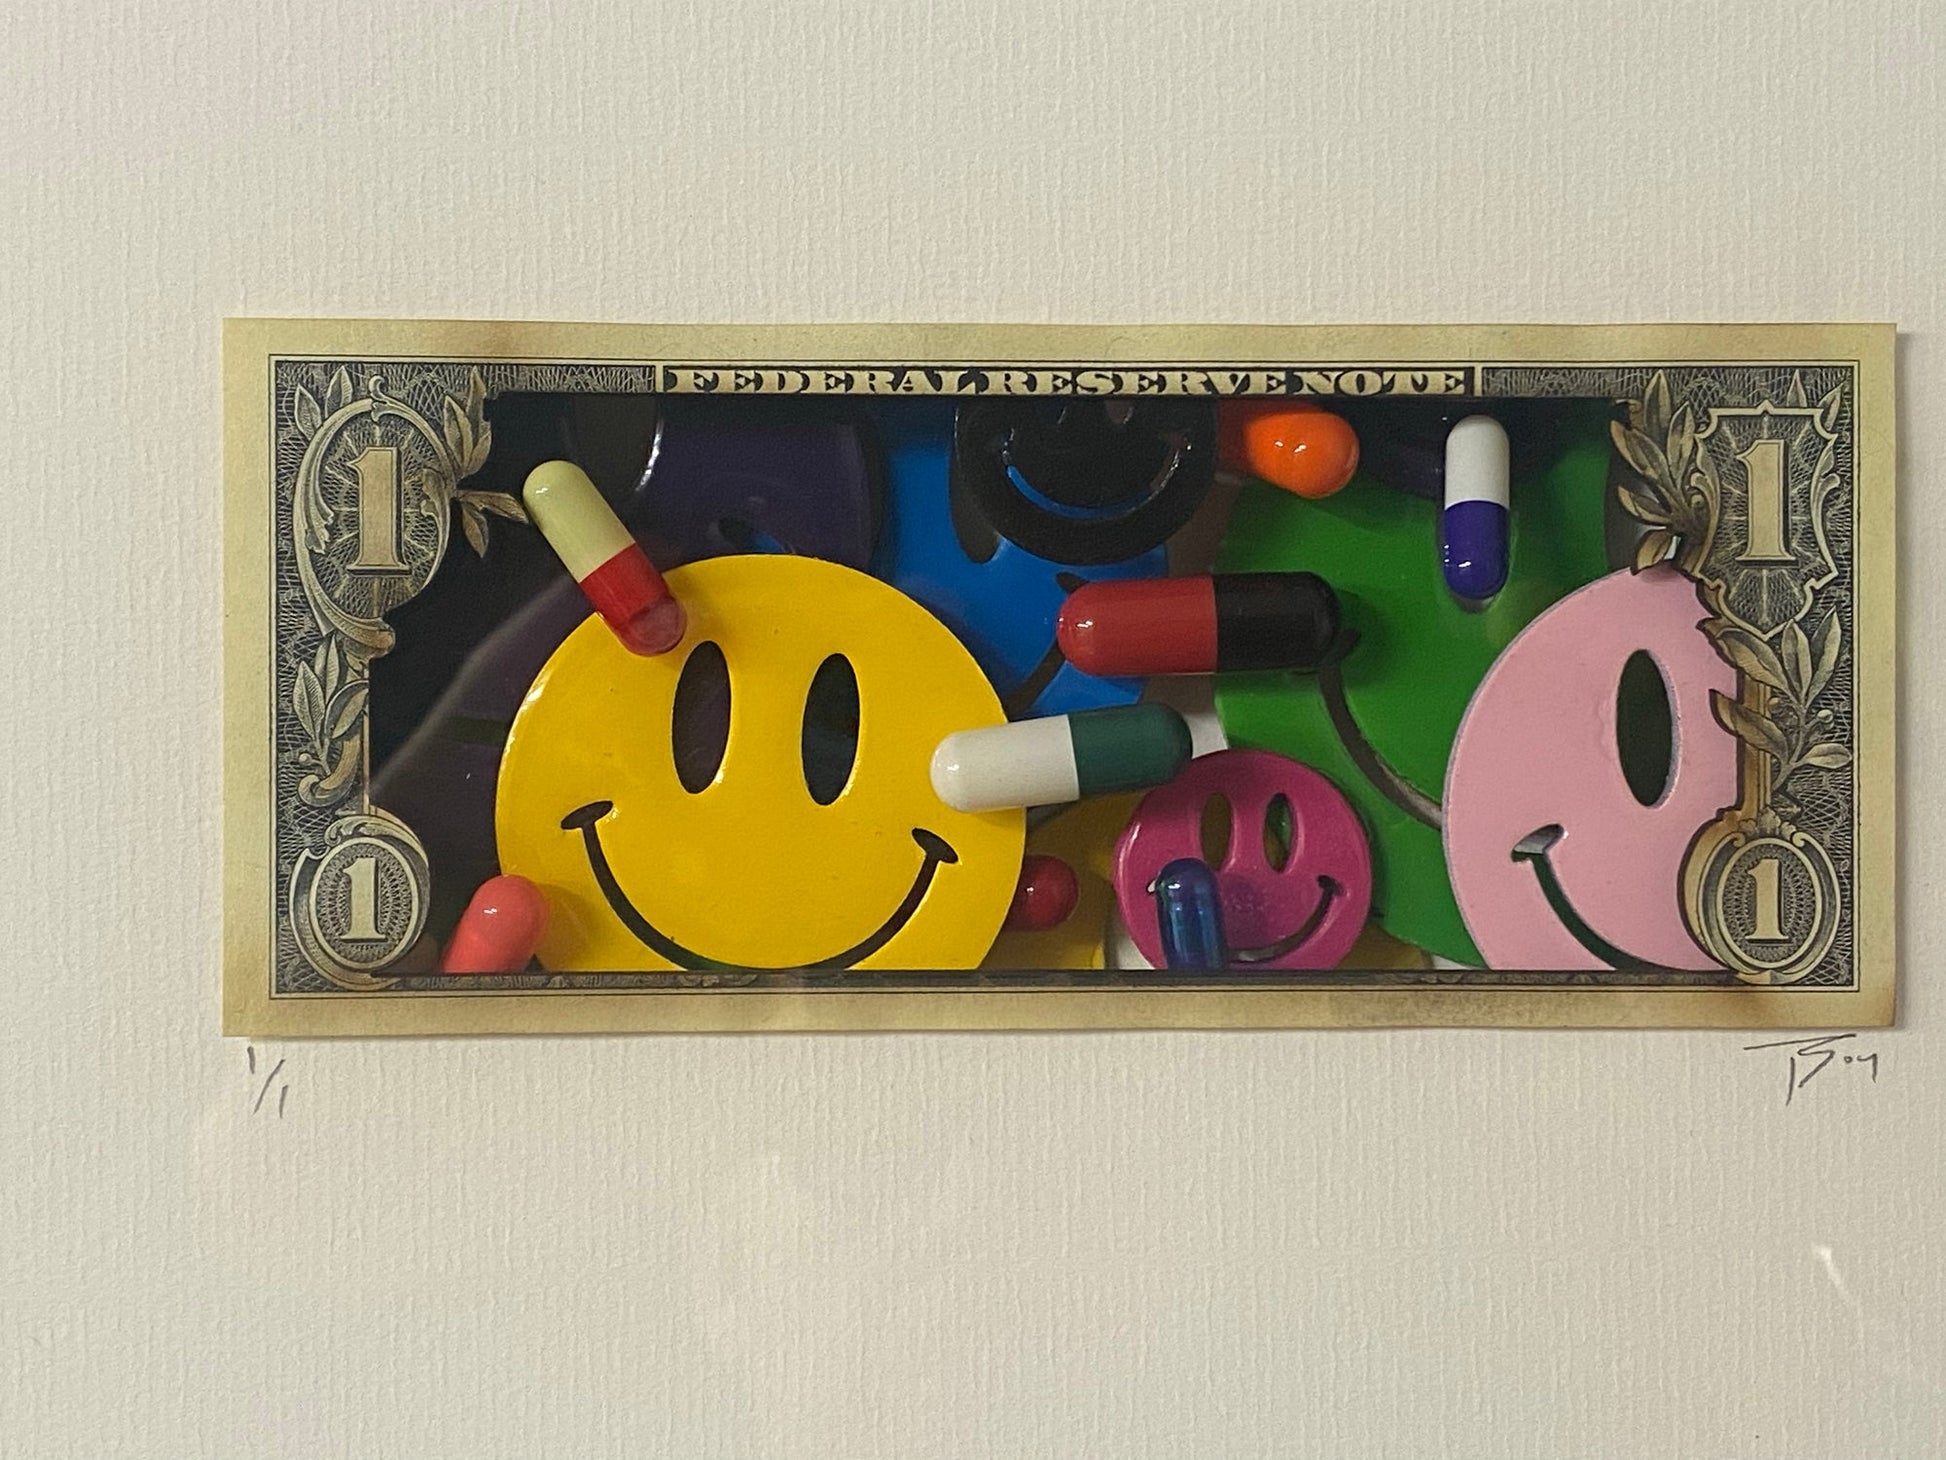 One dollar note, pills and thrills edition - Smolensky Gallery